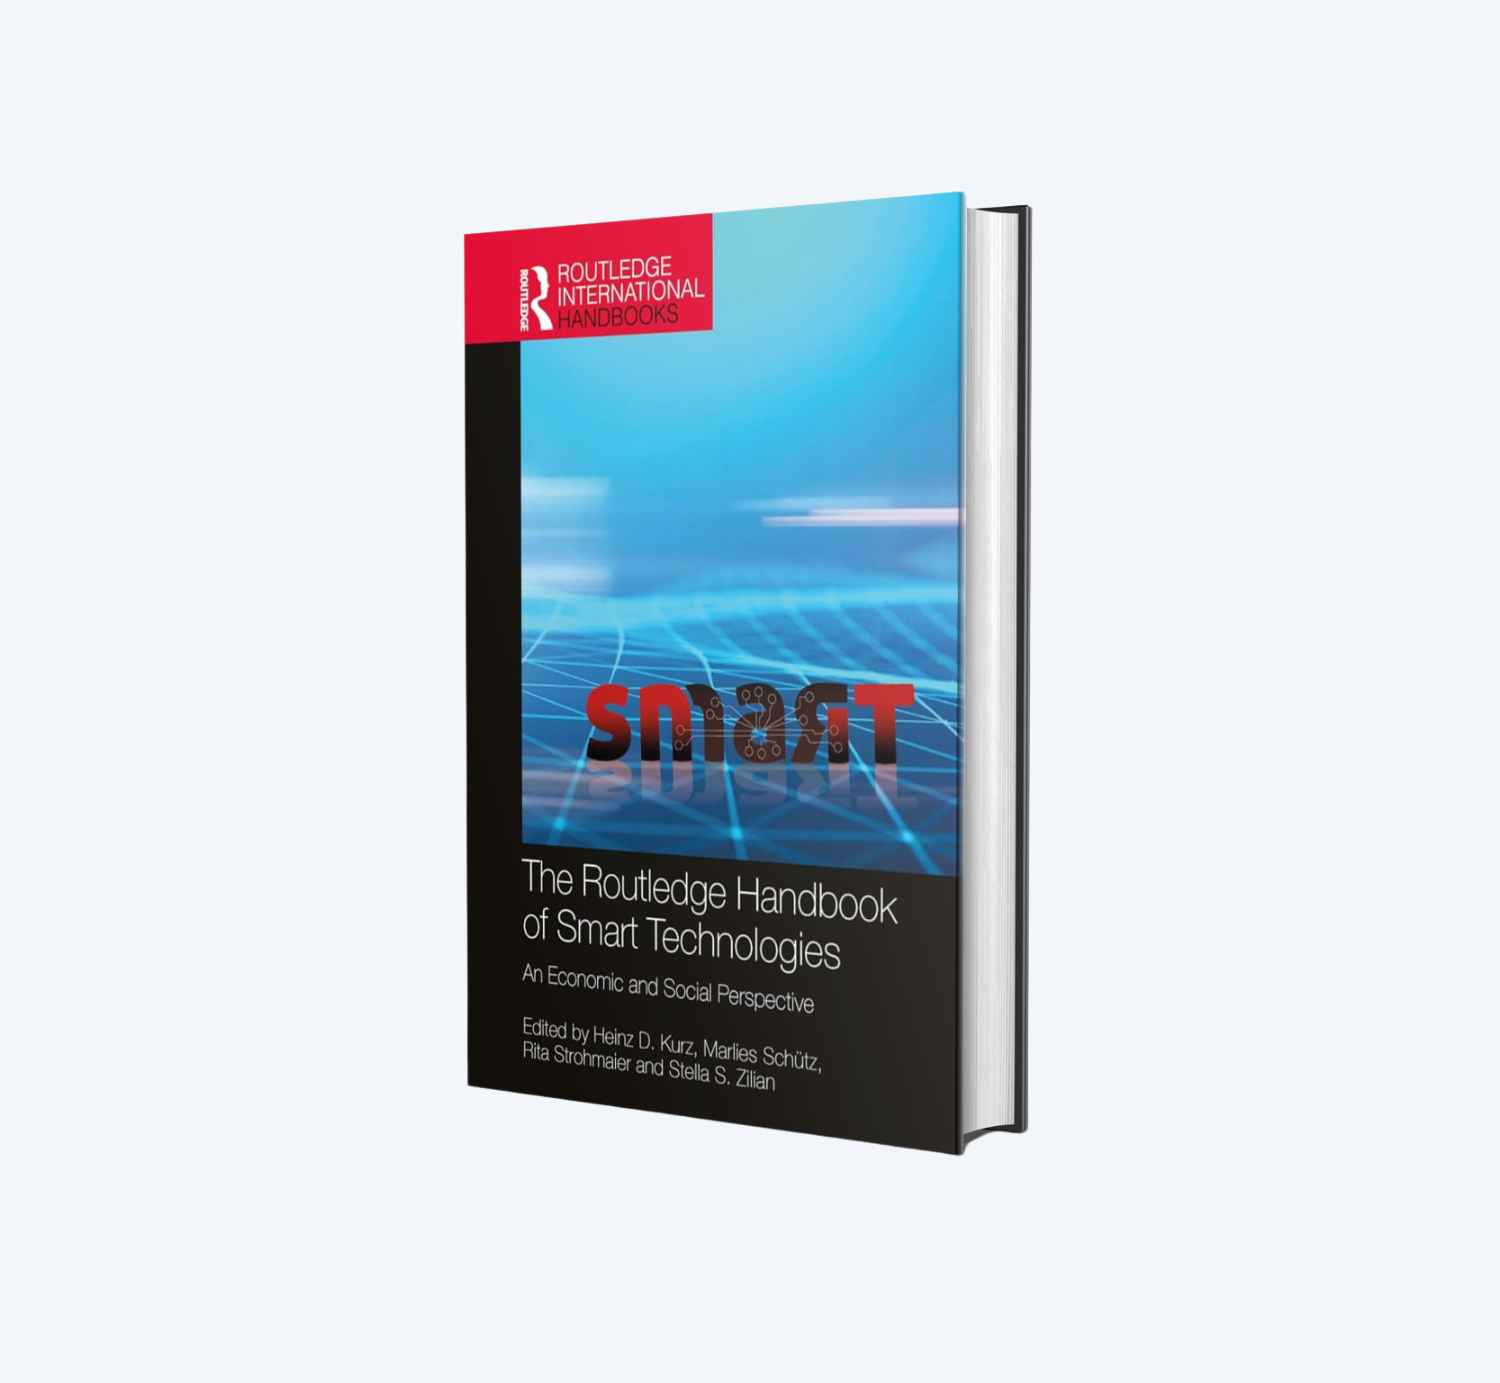 The Routledge Handbook of Smart Technologies